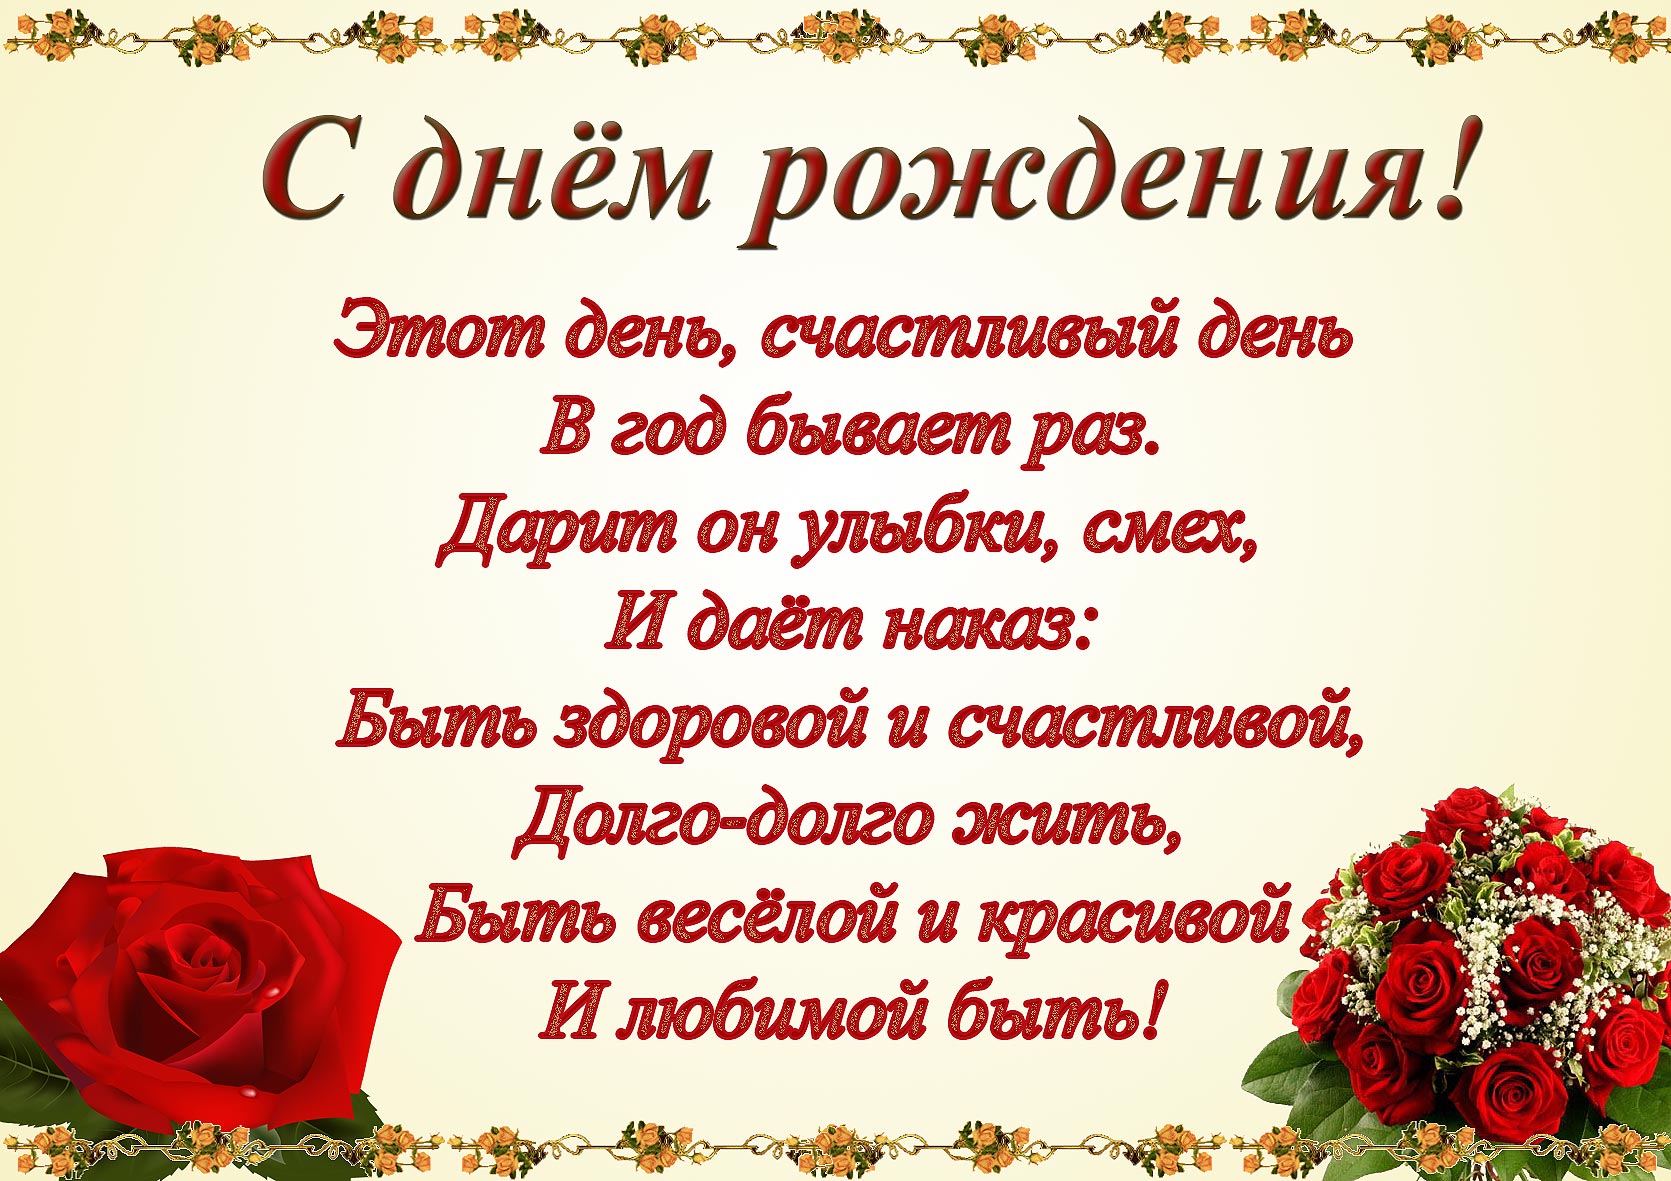 http://centrprazdnika.ru/uploads/posts/2012-05/1338117485_7.jpg